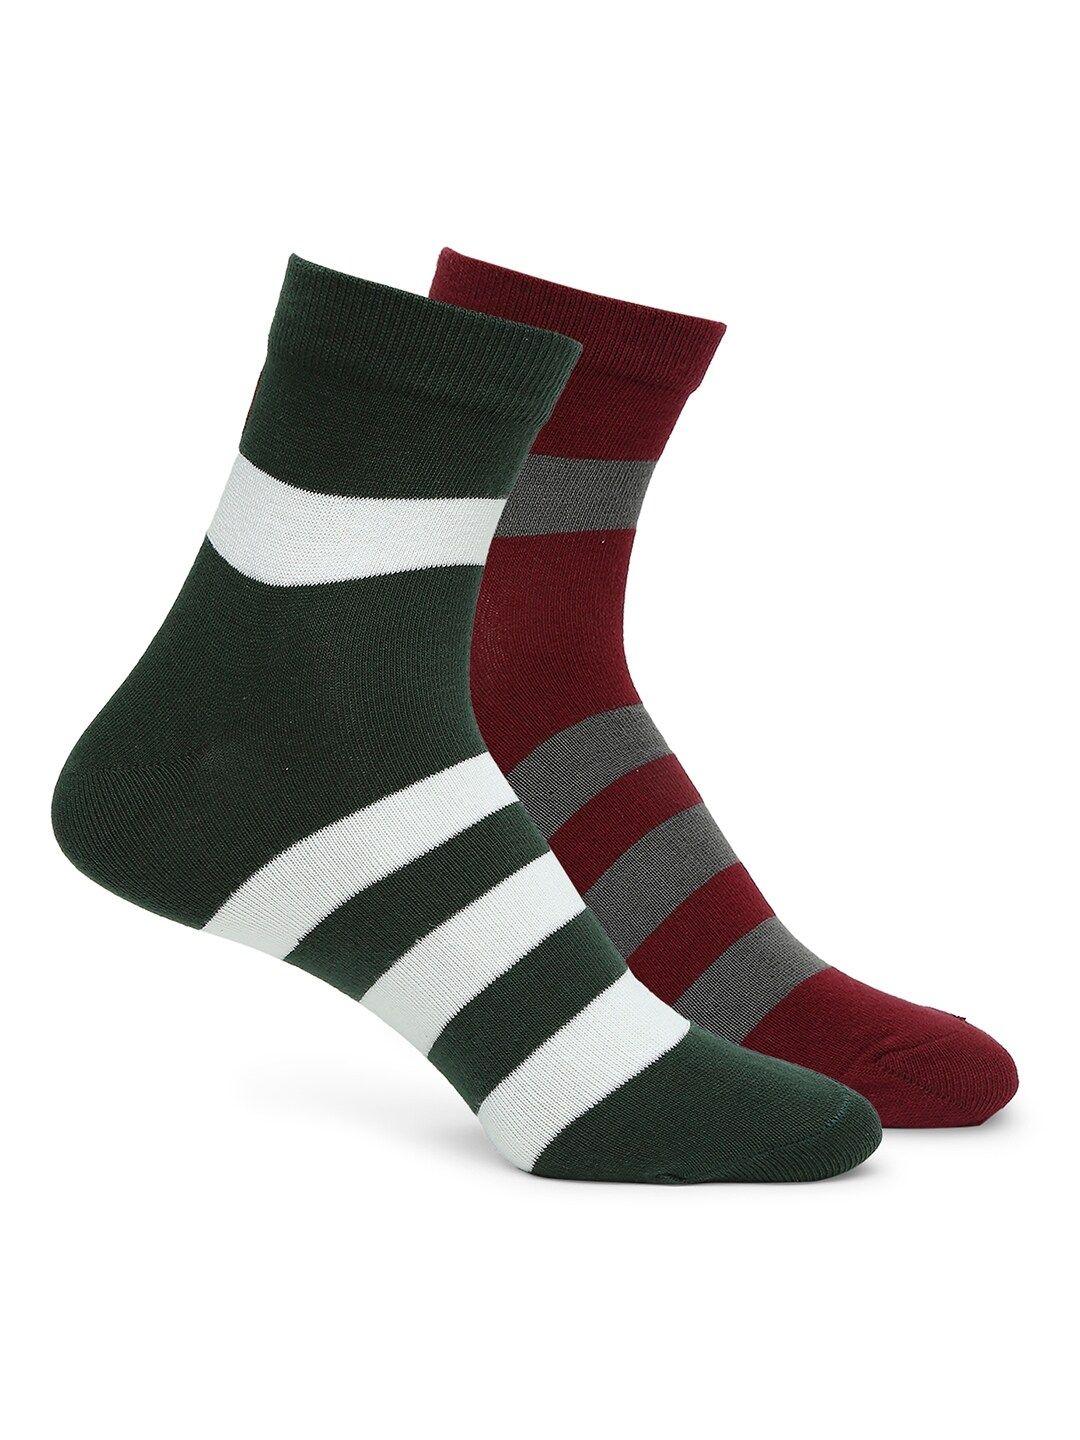 underjeans-by-spykar-men-pack-of-2-assorted-patterned-cotton-above-ankle-length-socks